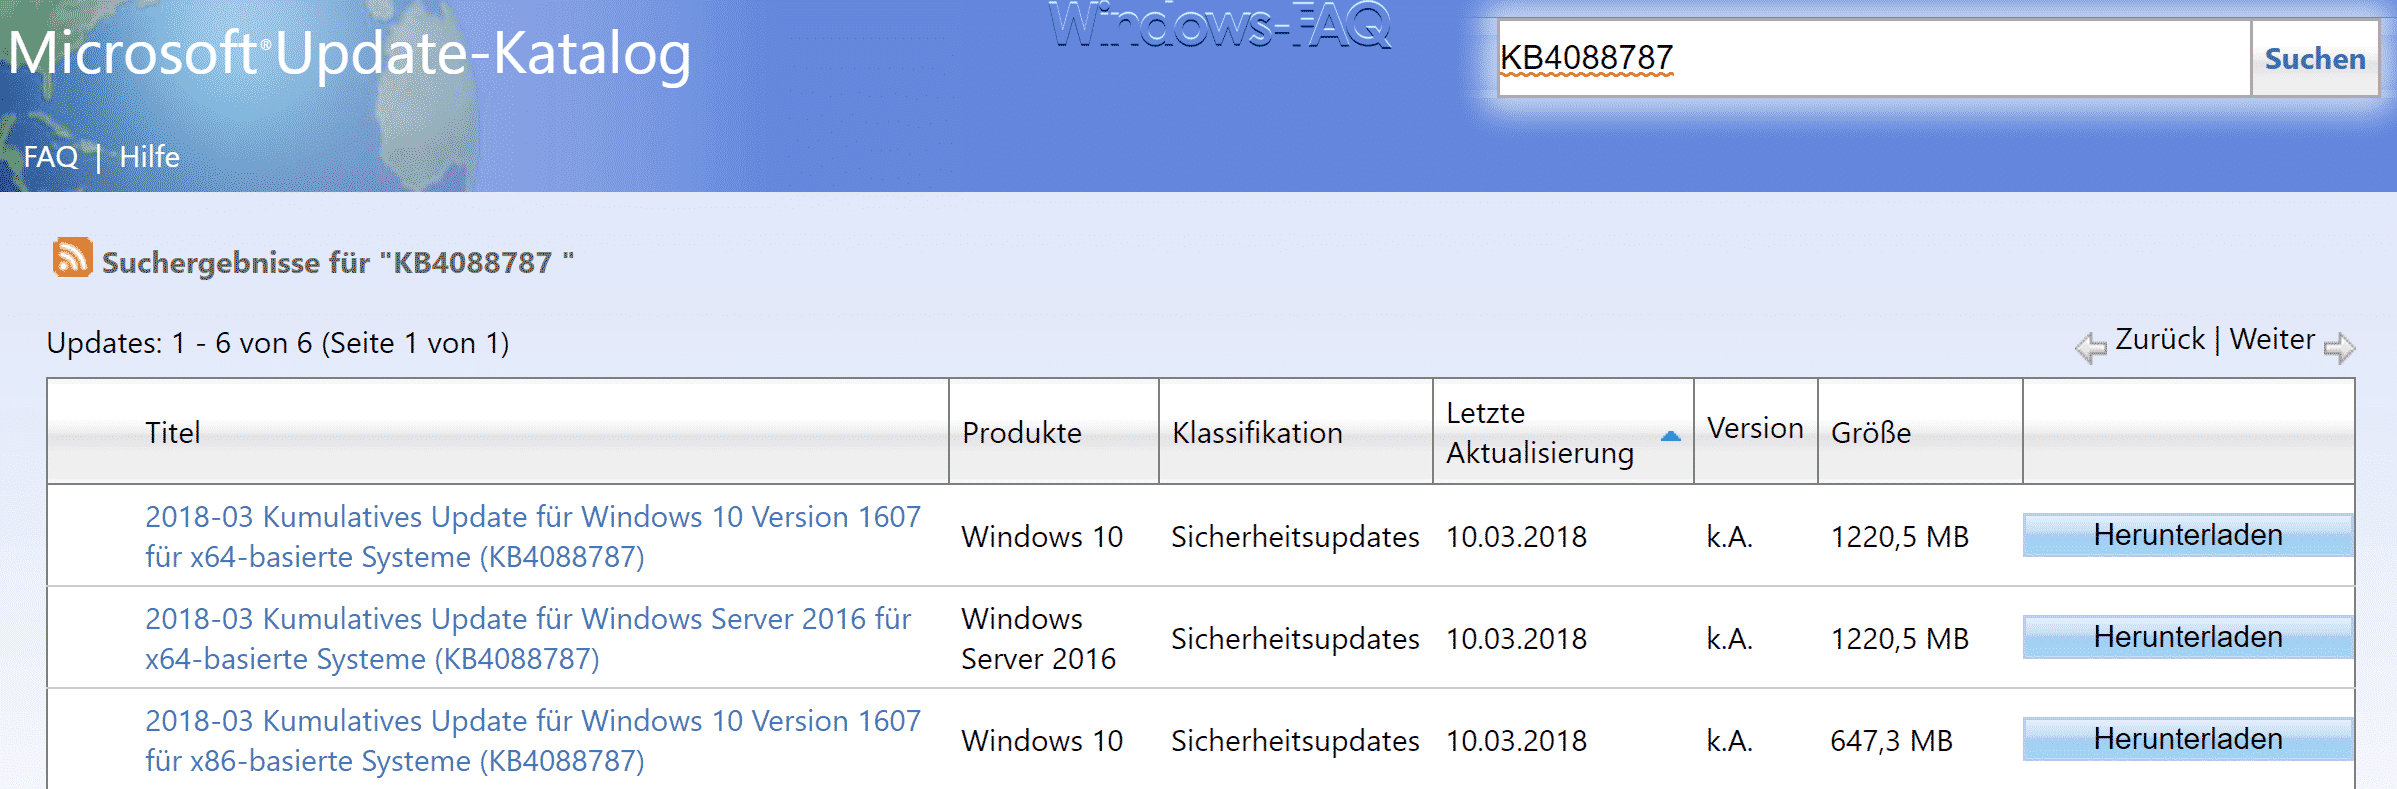 KB4088787 Anniversary Update 1607 Build 14393.2125 Download